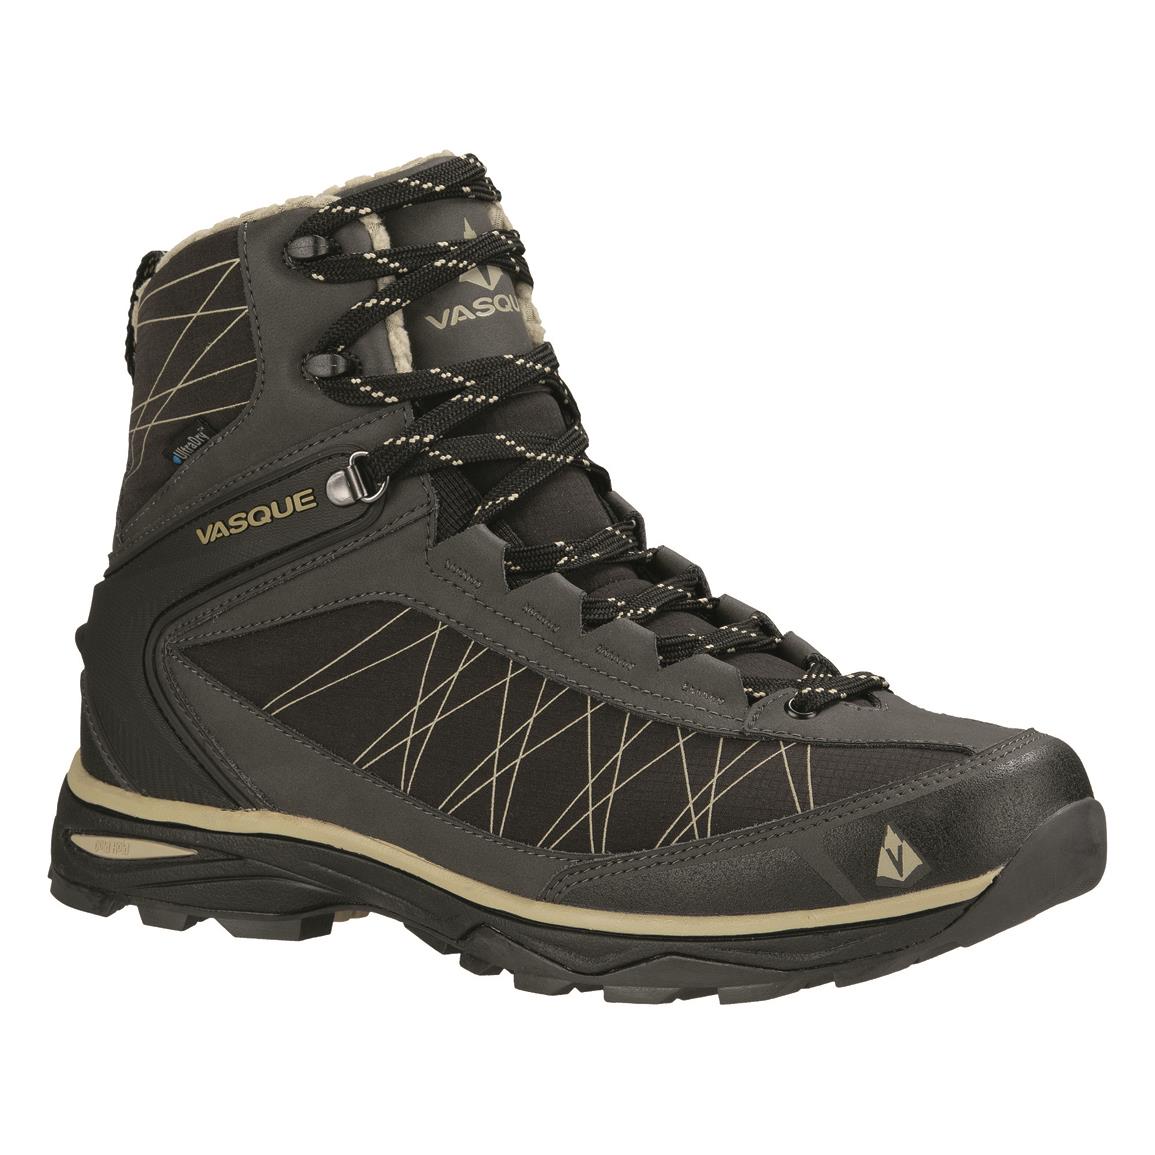 Vasque Men's Coldspark UltraDry Waterproof Insulated Boots, Jet Black/chinchilla